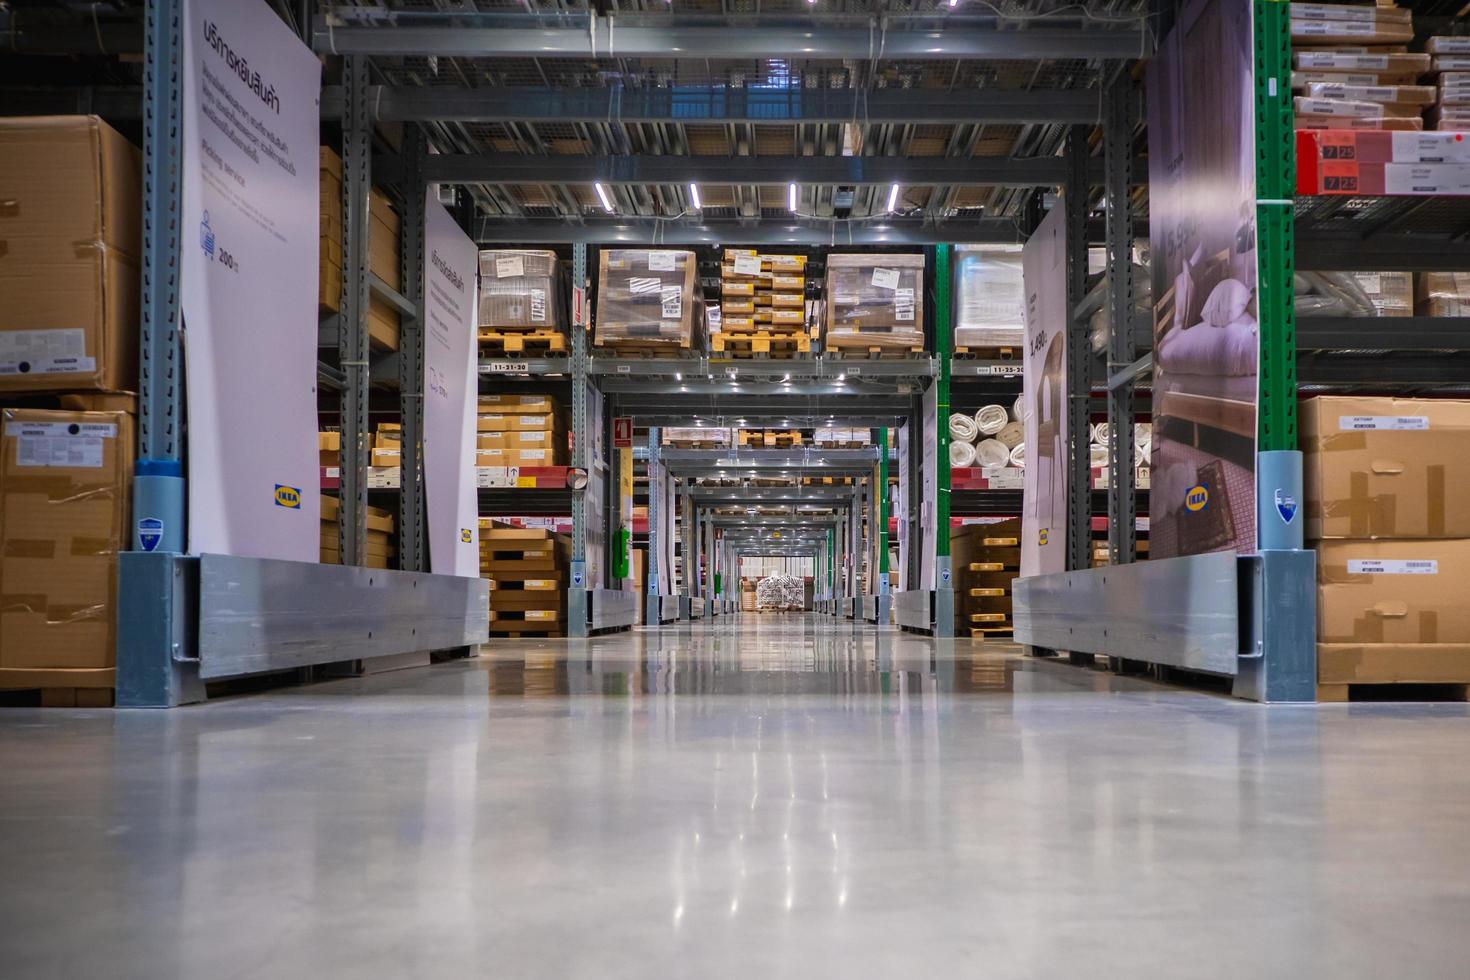 Warehouse aisle in an IKEA store photo